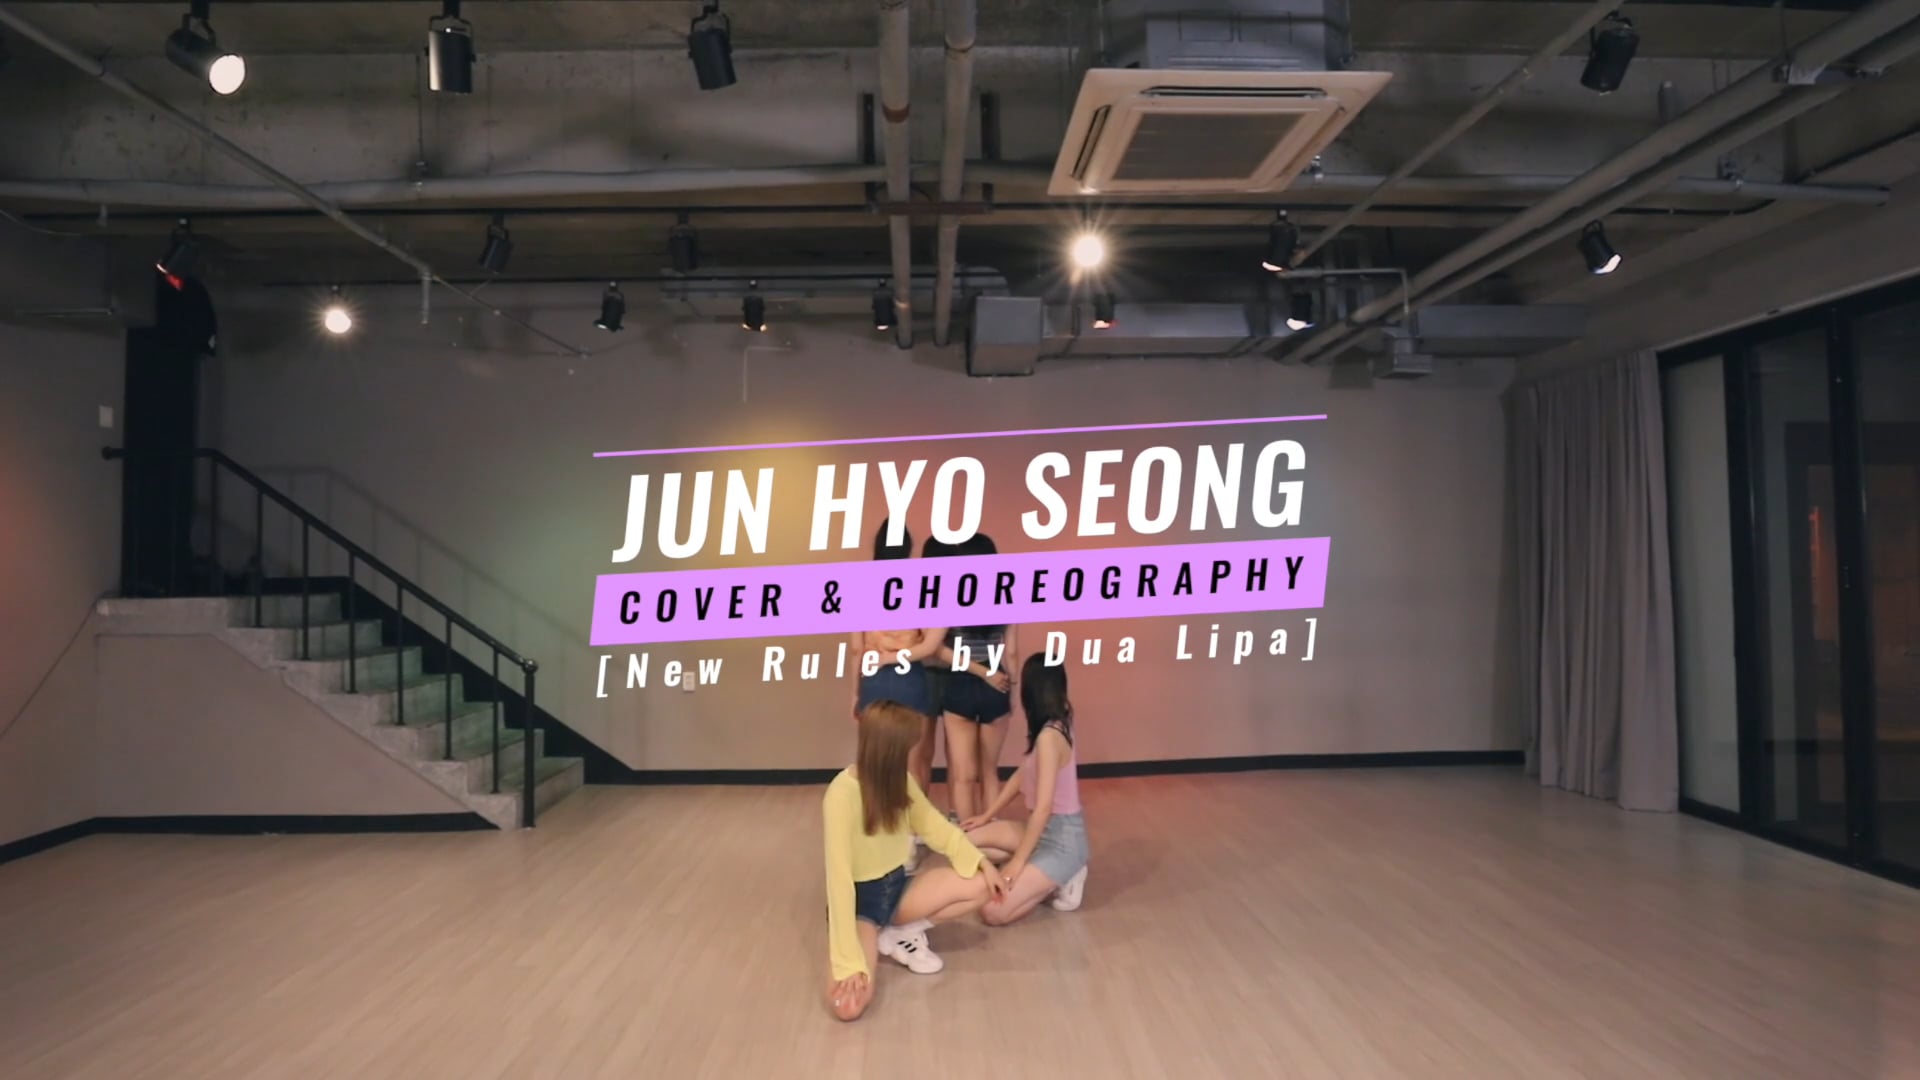 JUN HYO SEONG COVER & CHOREOGRAPHY - New Rules by Dua Lipa [Trephic]